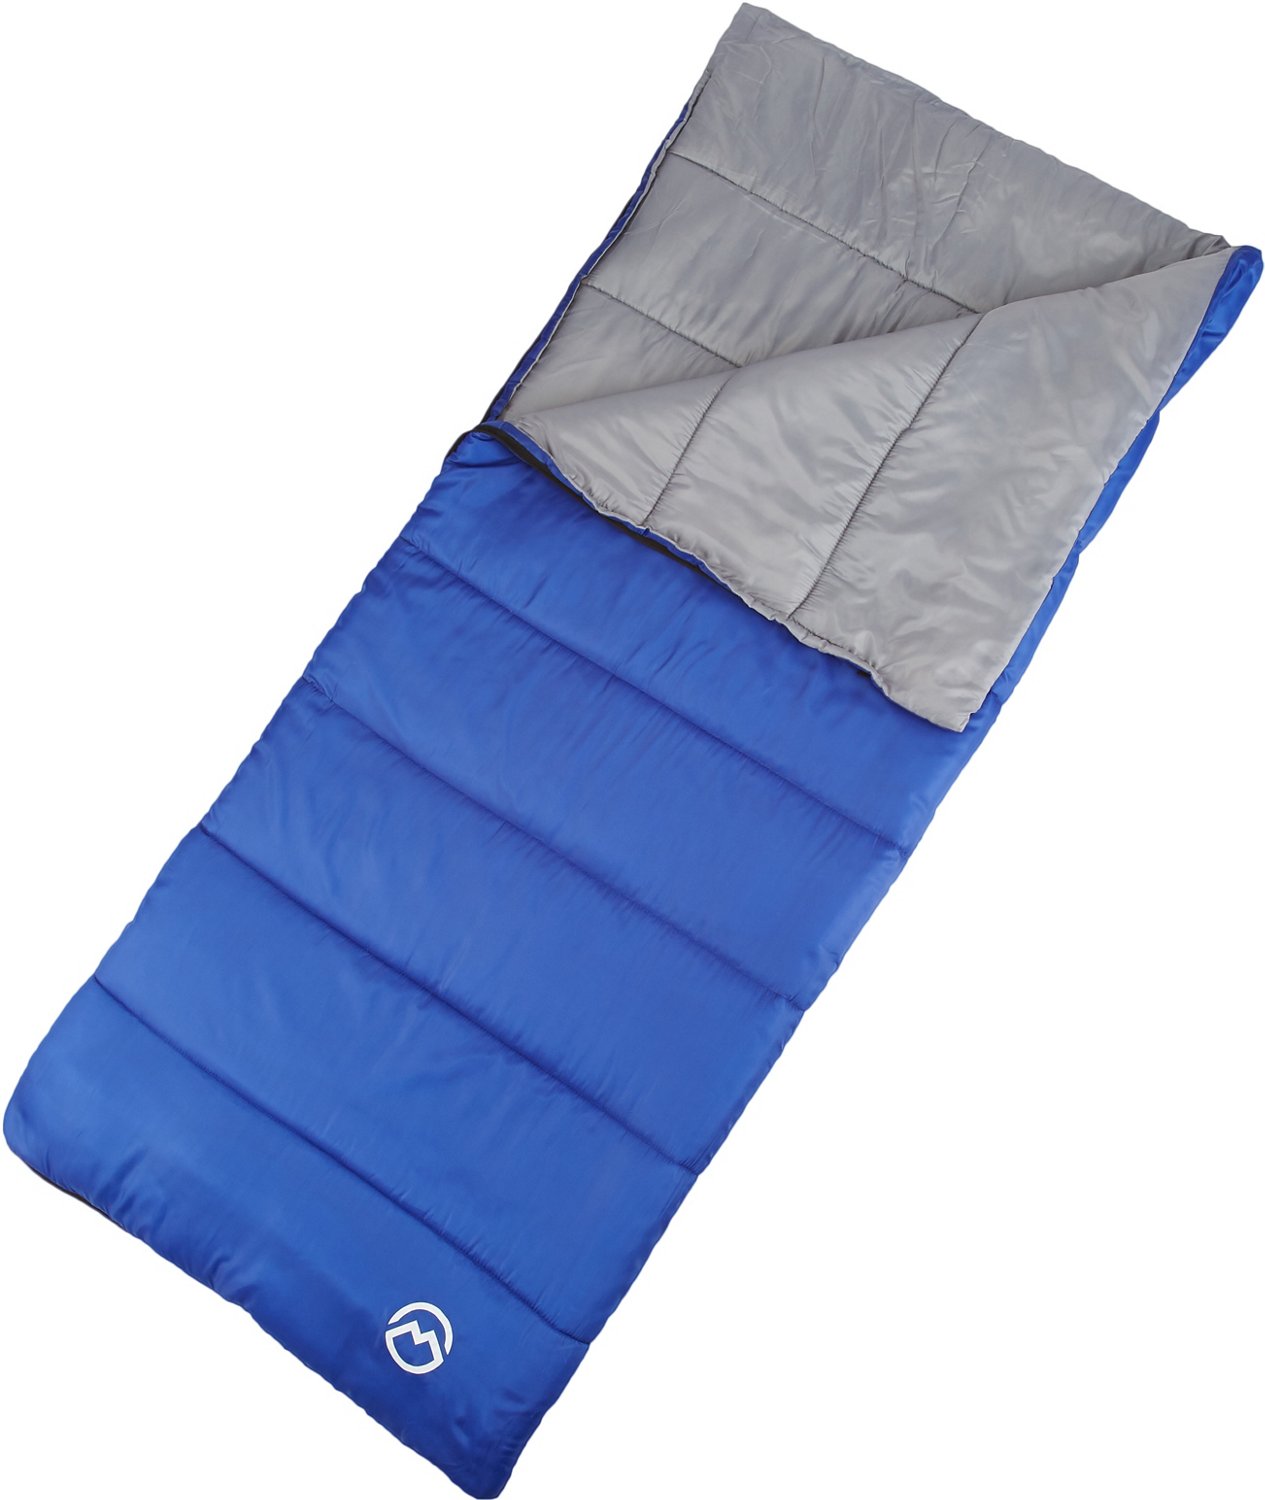 Magellan Outdoors Rectangle Sleeping Bag                                                                                         - view number 1 selected